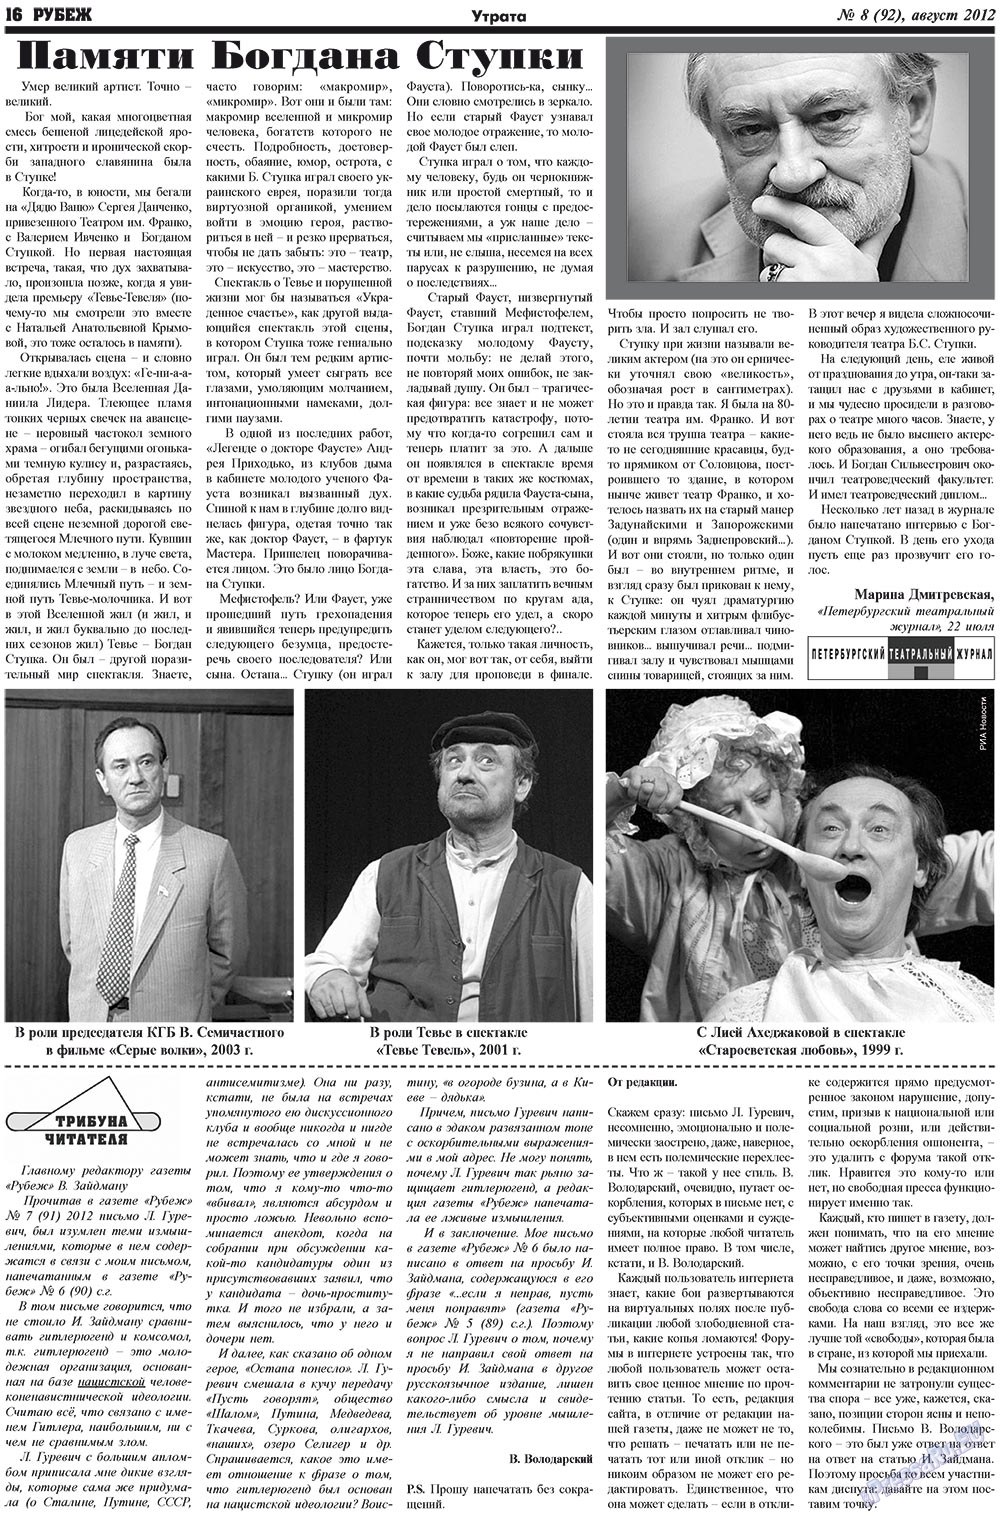 Рубеж, газета. 2012 №8 стр.16